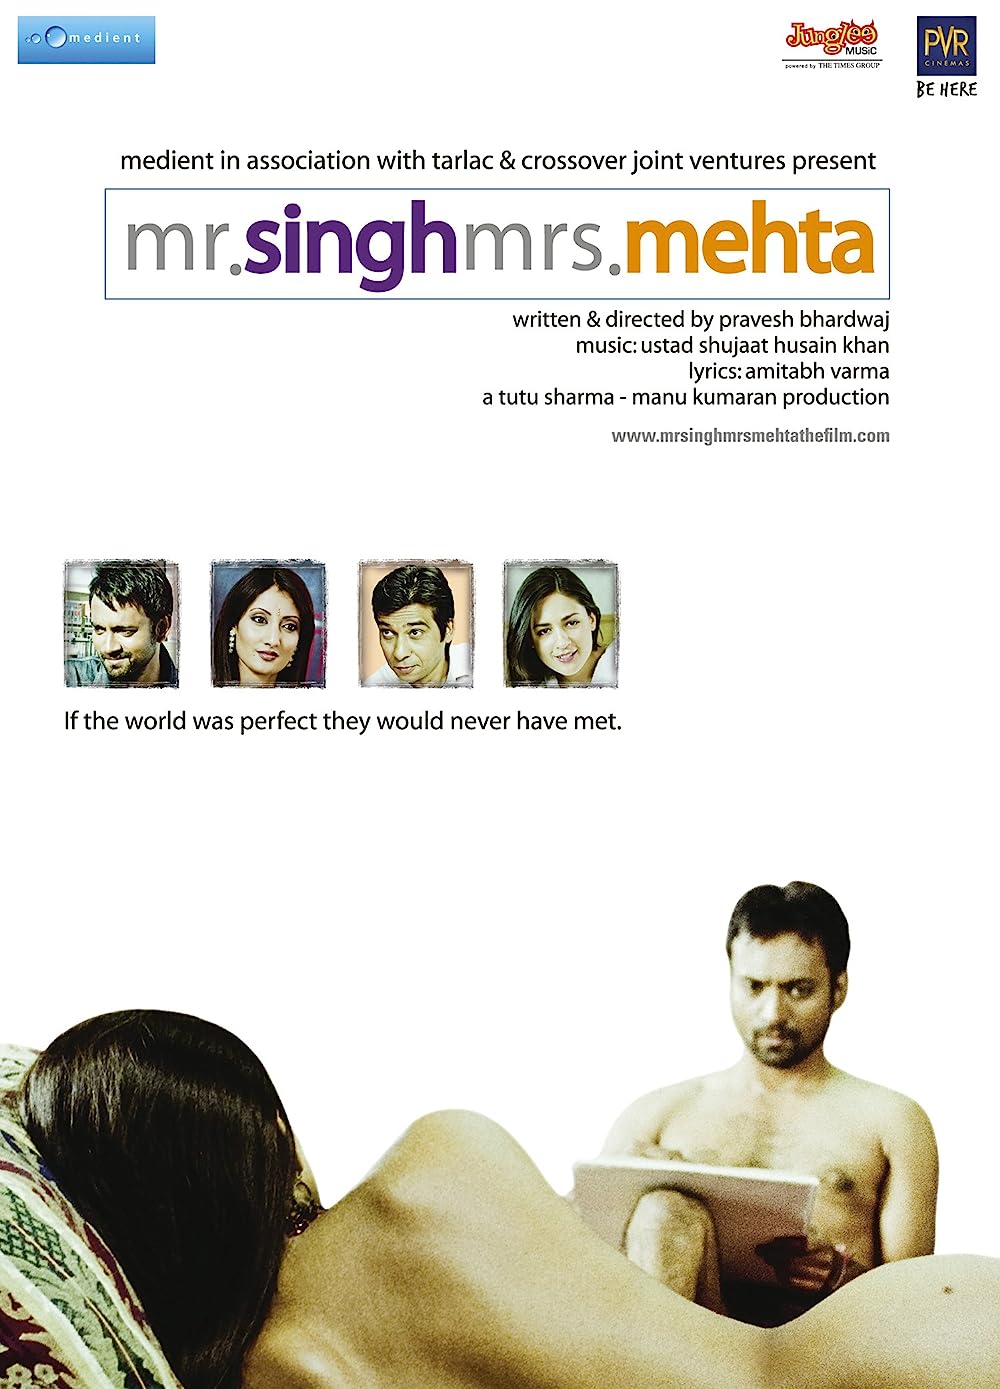 Steamy Movies on Netflix 0 Mrs.Singh.mrs.mehta